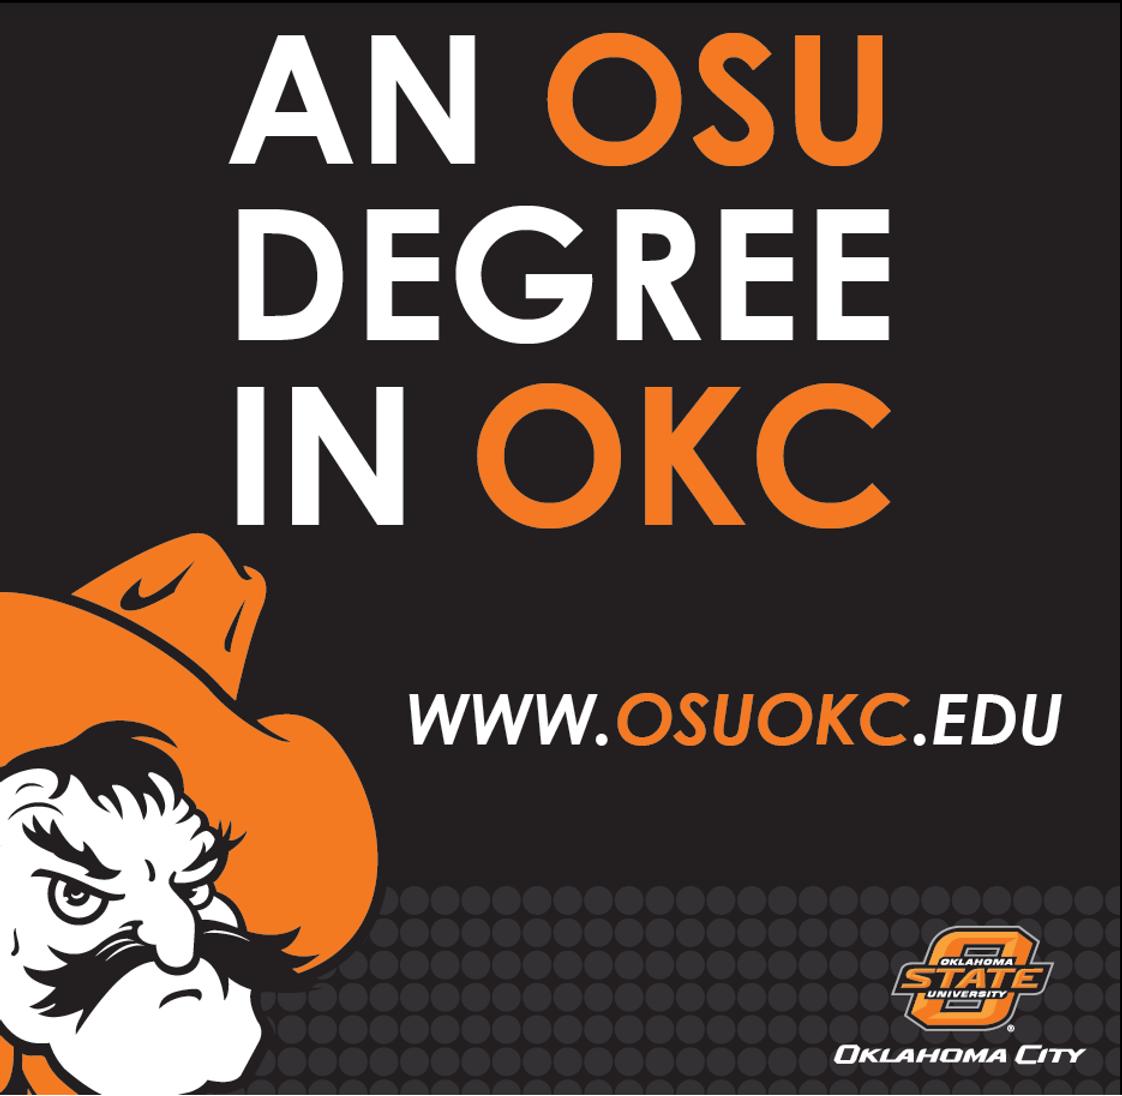 Oklahoma State University-Oklahoma City Photo #1 - OSU-Oklahoma City Earn an OSU degree in OKC.